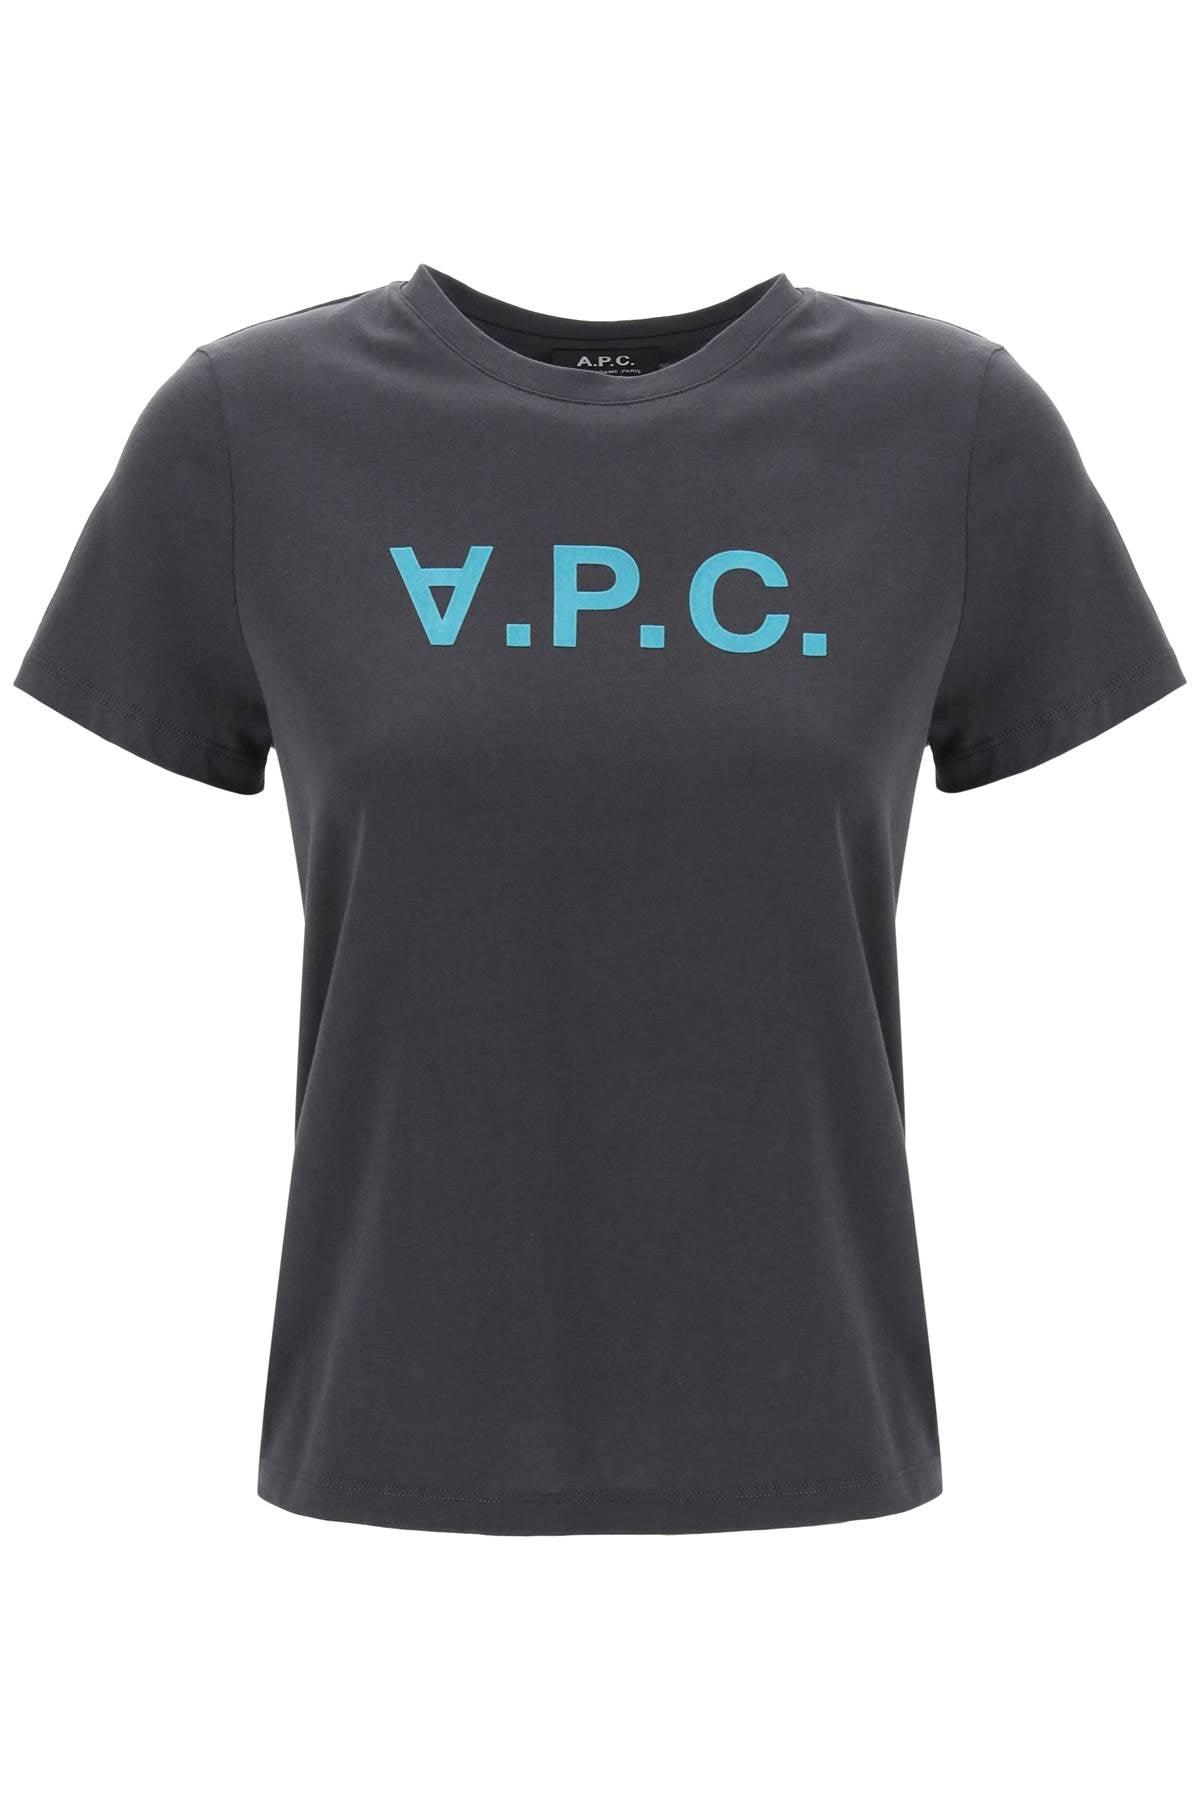 A.P.C. T Shirt With Flocked Vpc Logo - JOHN JULIA